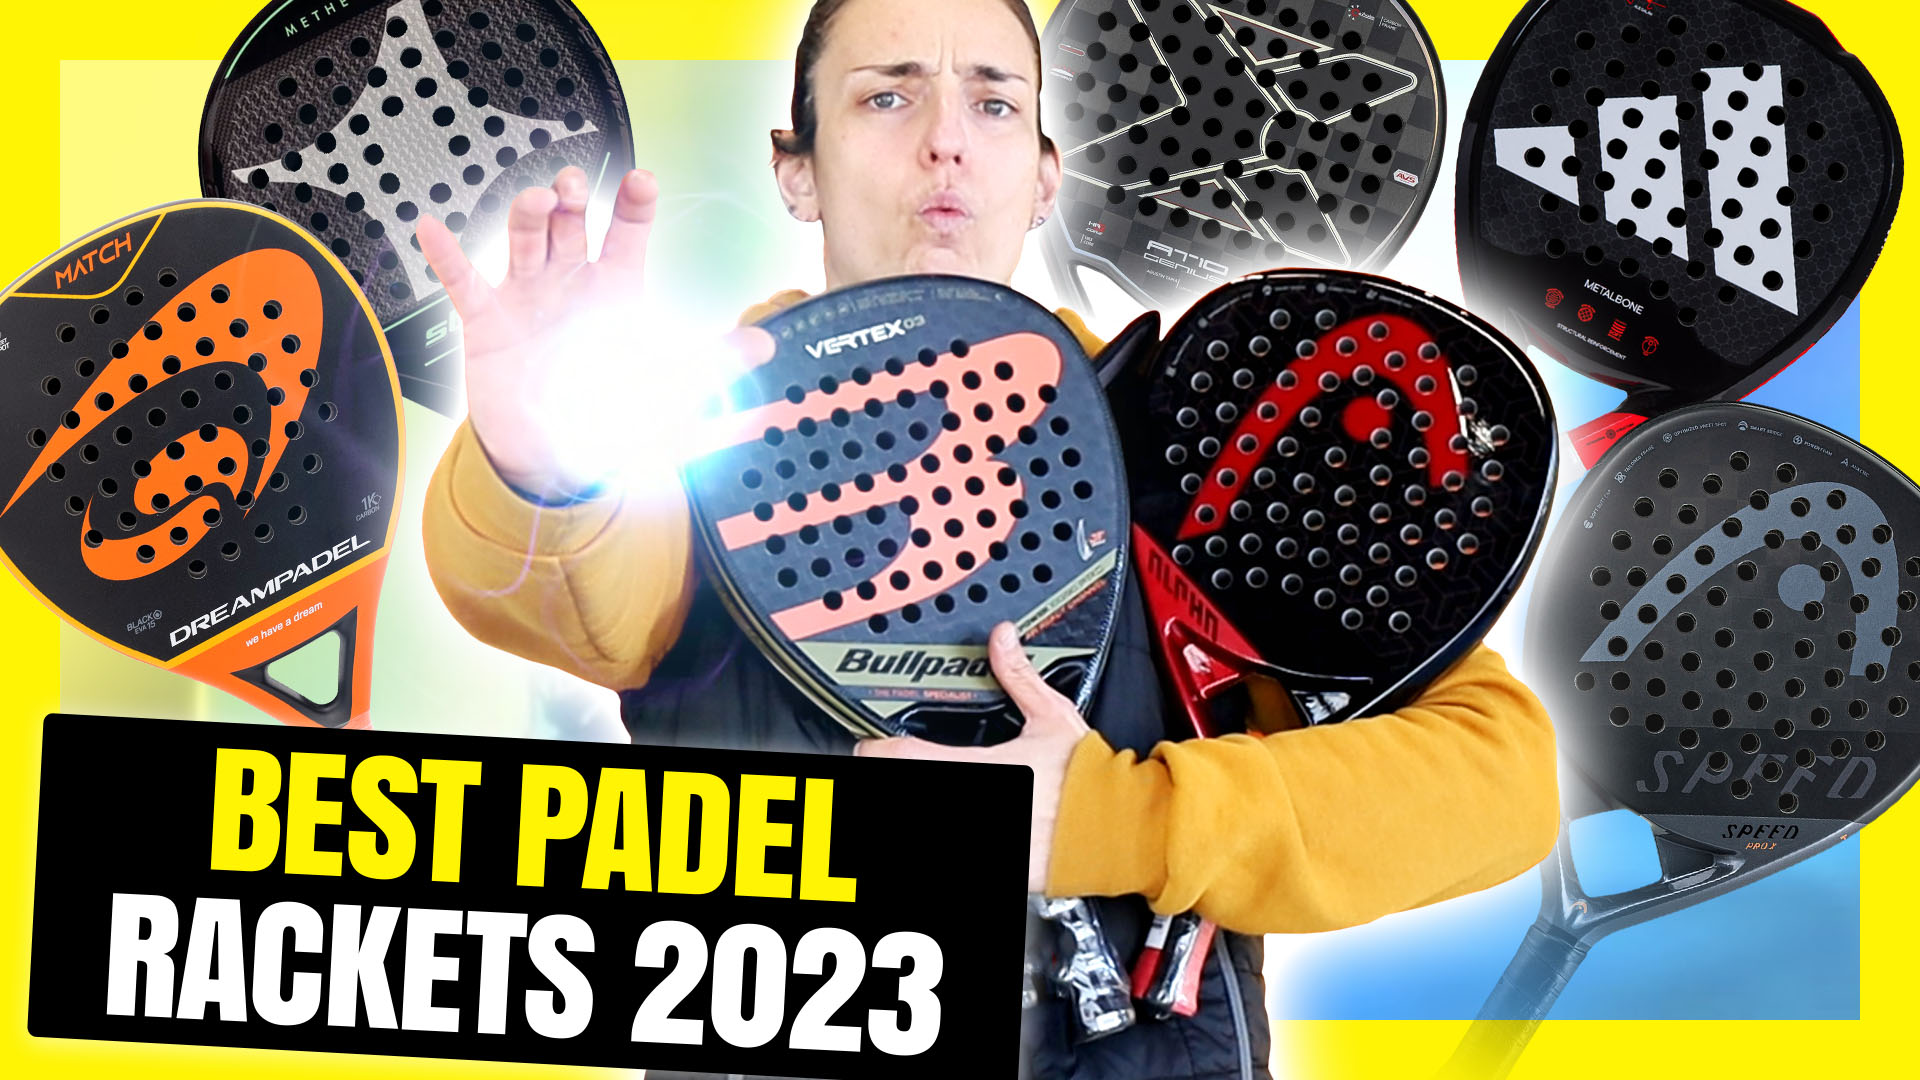 Professional Padel Racket